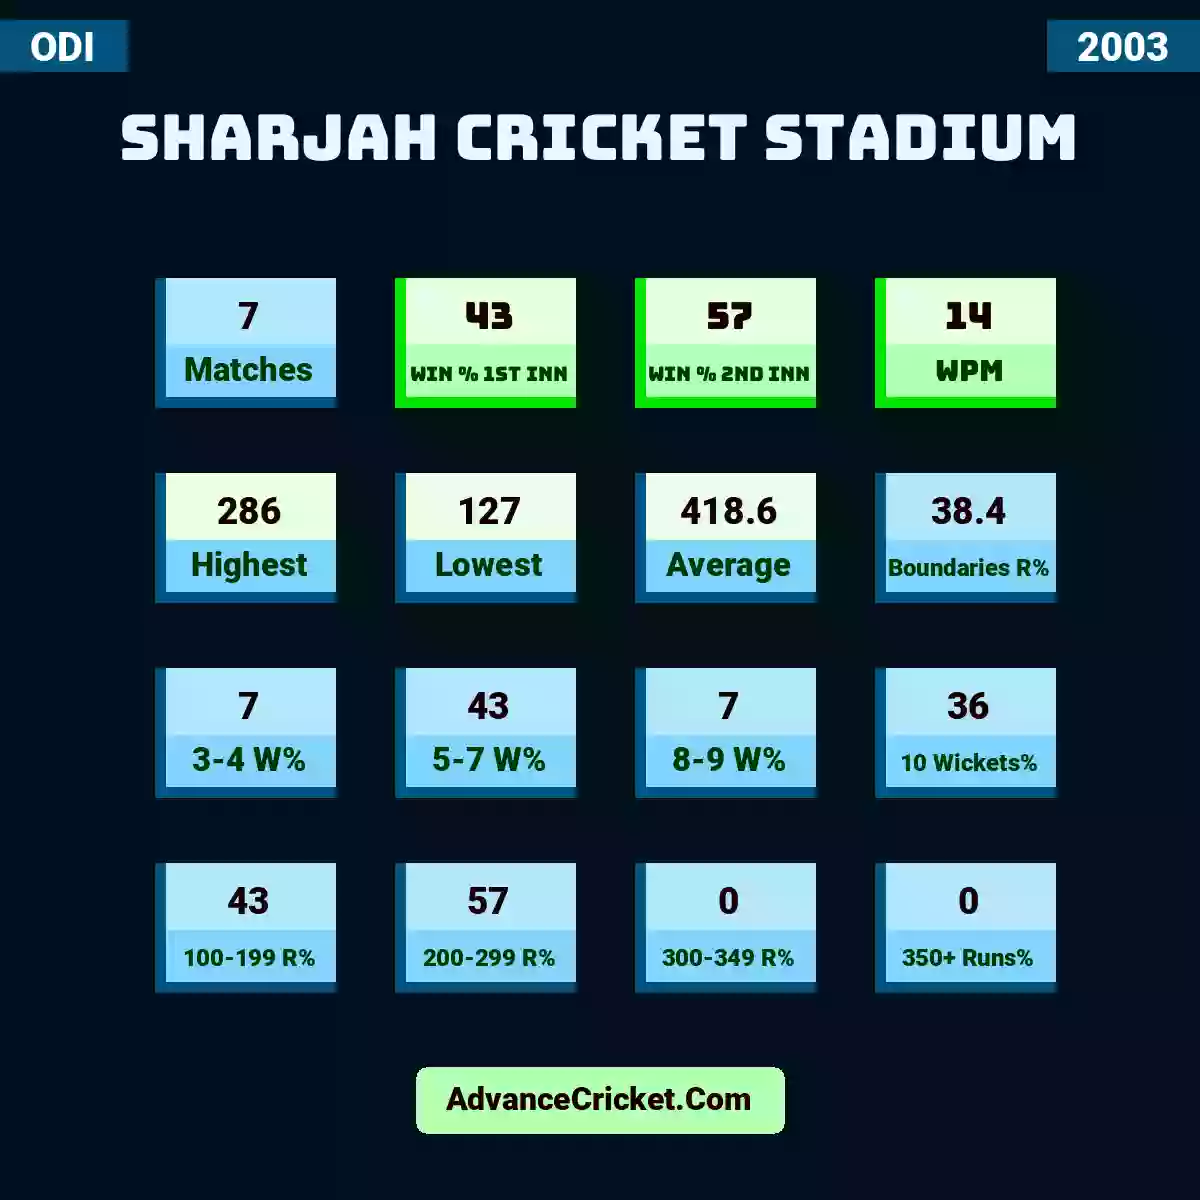 Image showing Sharjah Cricket Stadium with Matches: 7, Win % 1st Inn: 43, Win % 2nd Inn: 57, WPM: 14, Highest: 286, Lowest: 127, Average: 418.6, Boundaries R%: 38.4, 3-4 W%: 7, 5-7 W%: 43, 8-9 W%: 7, 10 Wickets%: 36, 100-199 R%: 43, 200-299 R%: 57, 300-349 R%: 0, 350+ Runs%: 0.